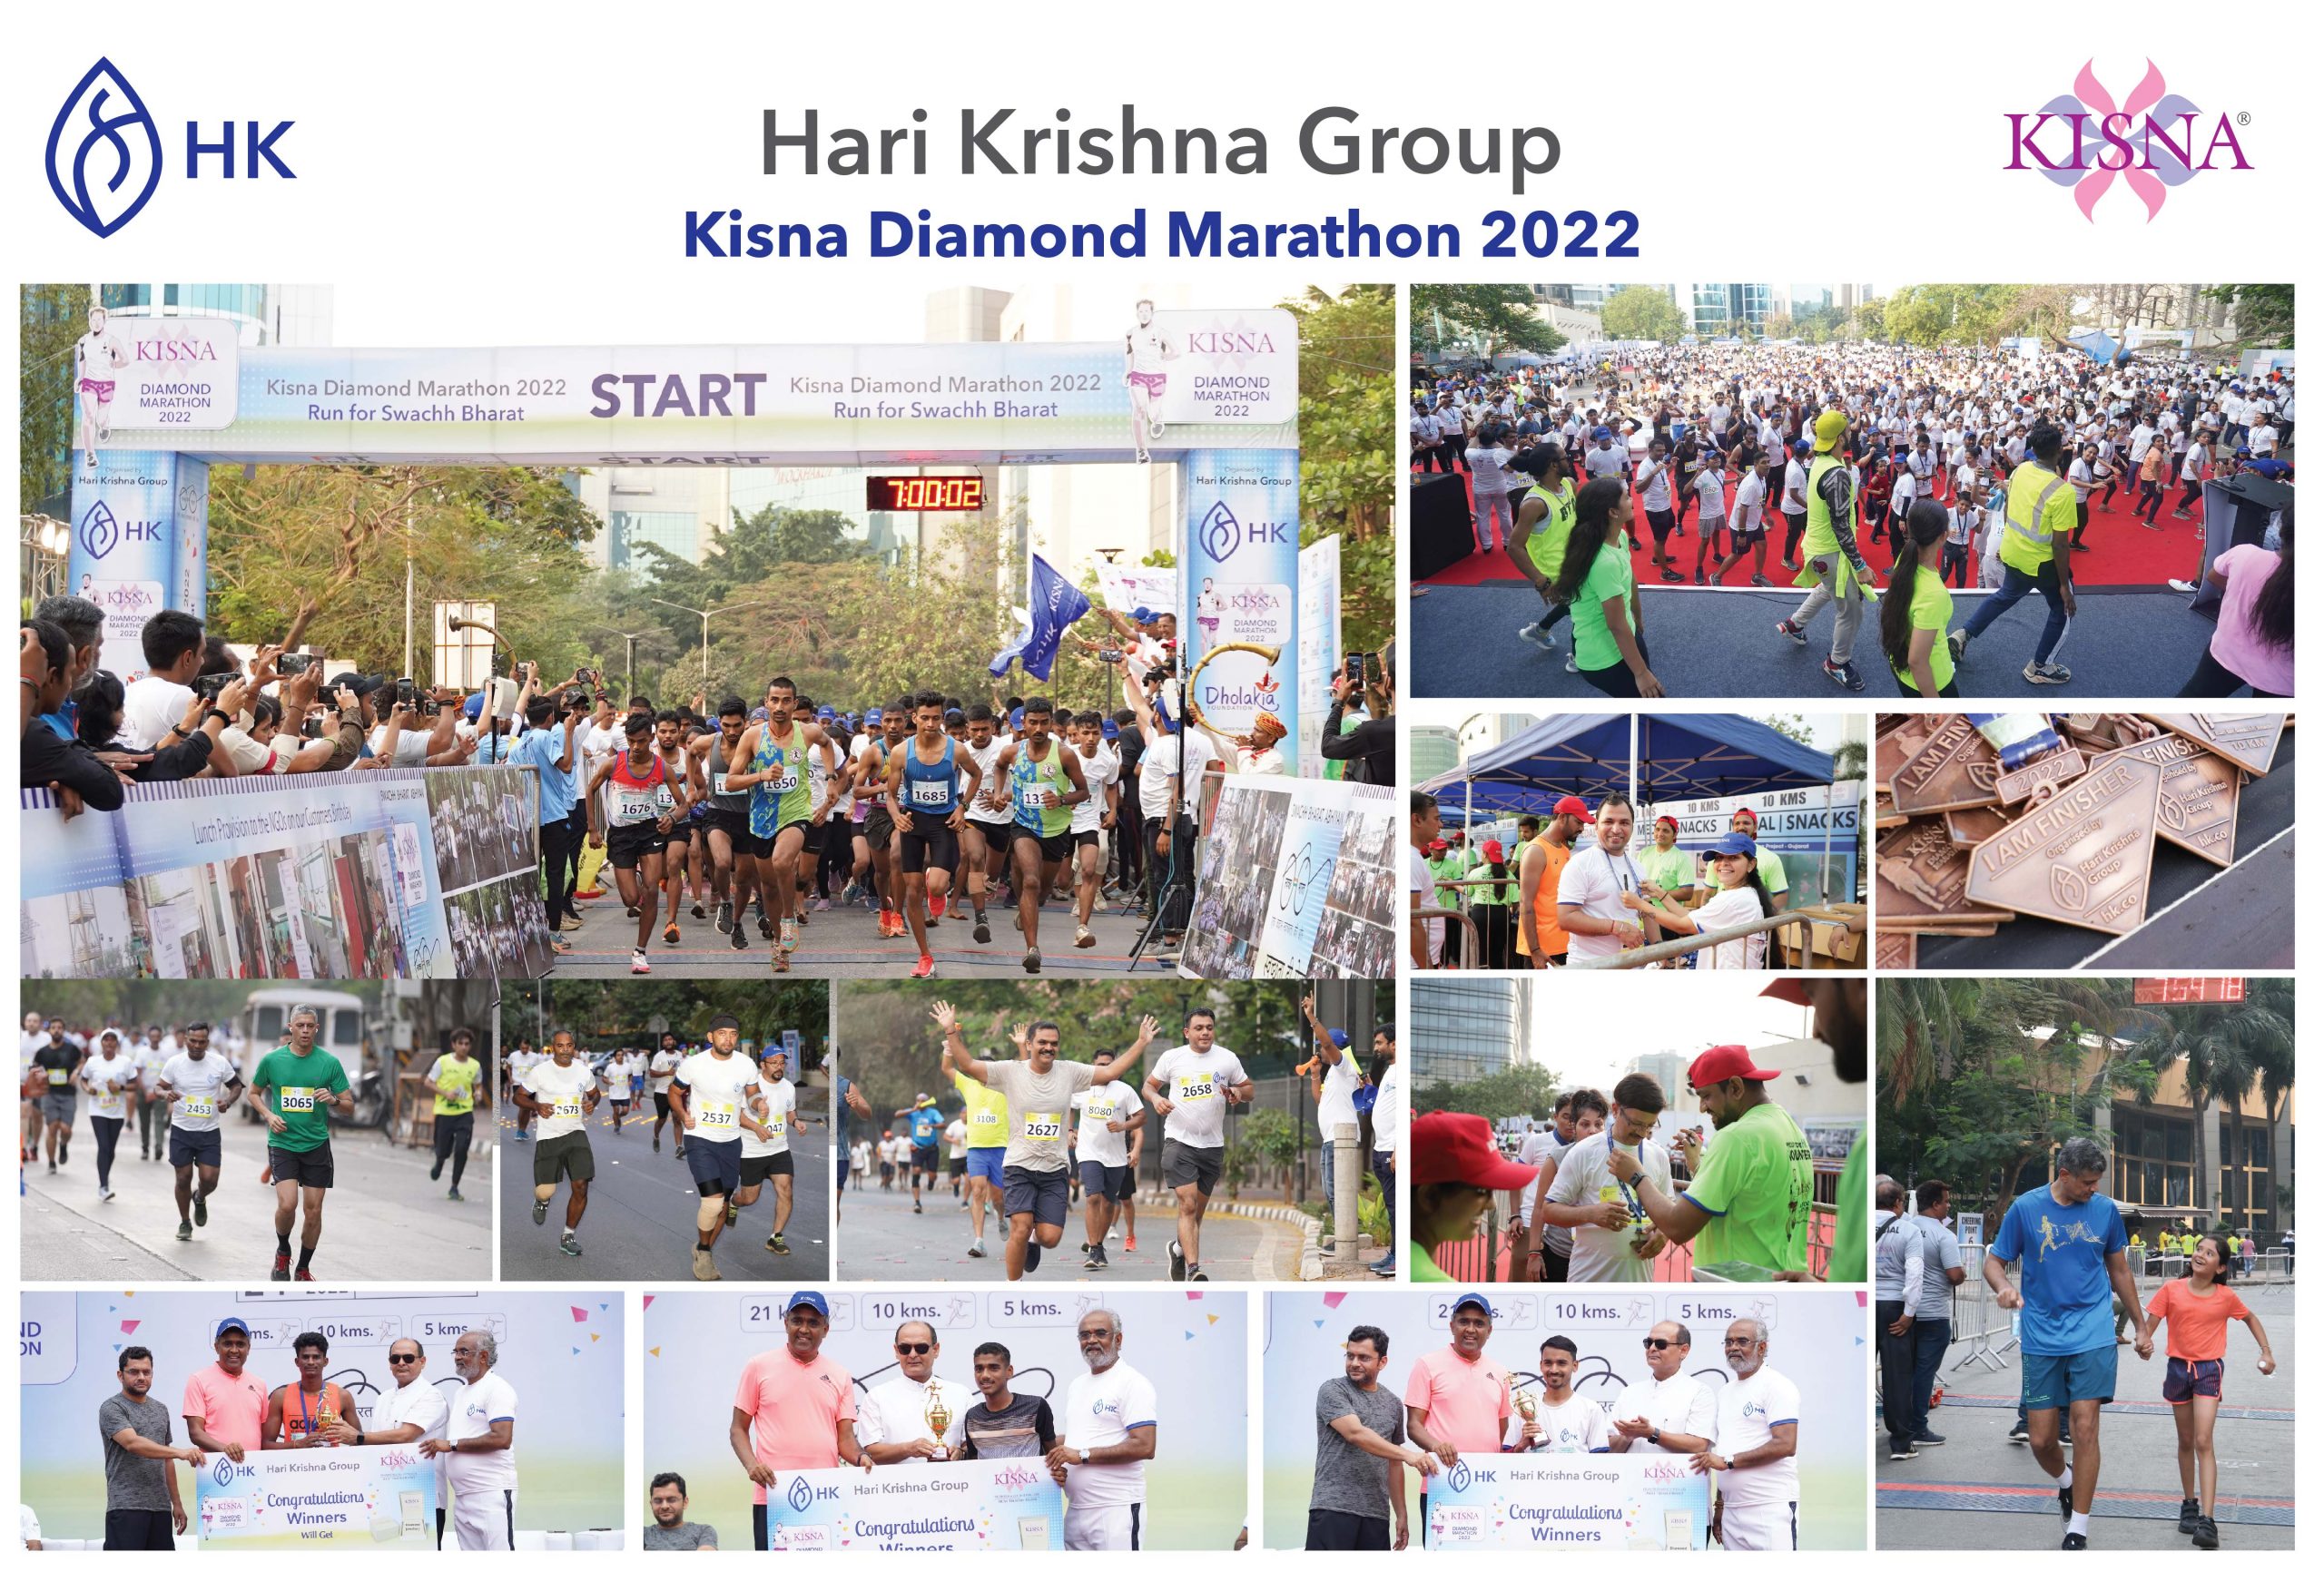 Hari Krishna Exports organized a run for Swachh Bharat under the 6th Edition of the Kisna Diamond Marathon